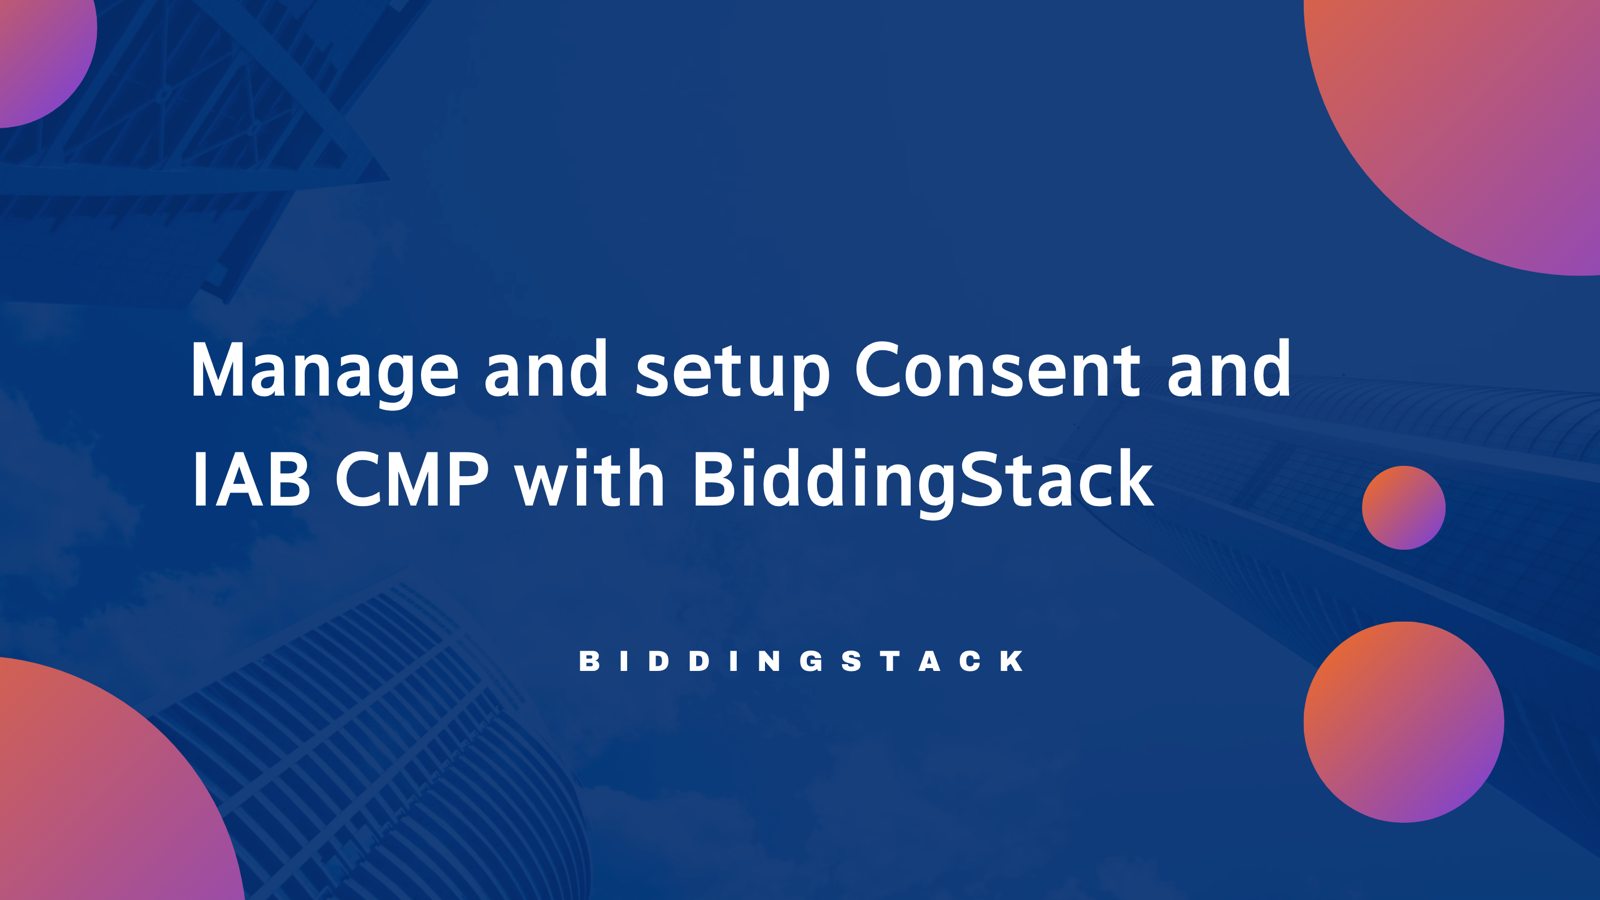 cmp with BiddingStack